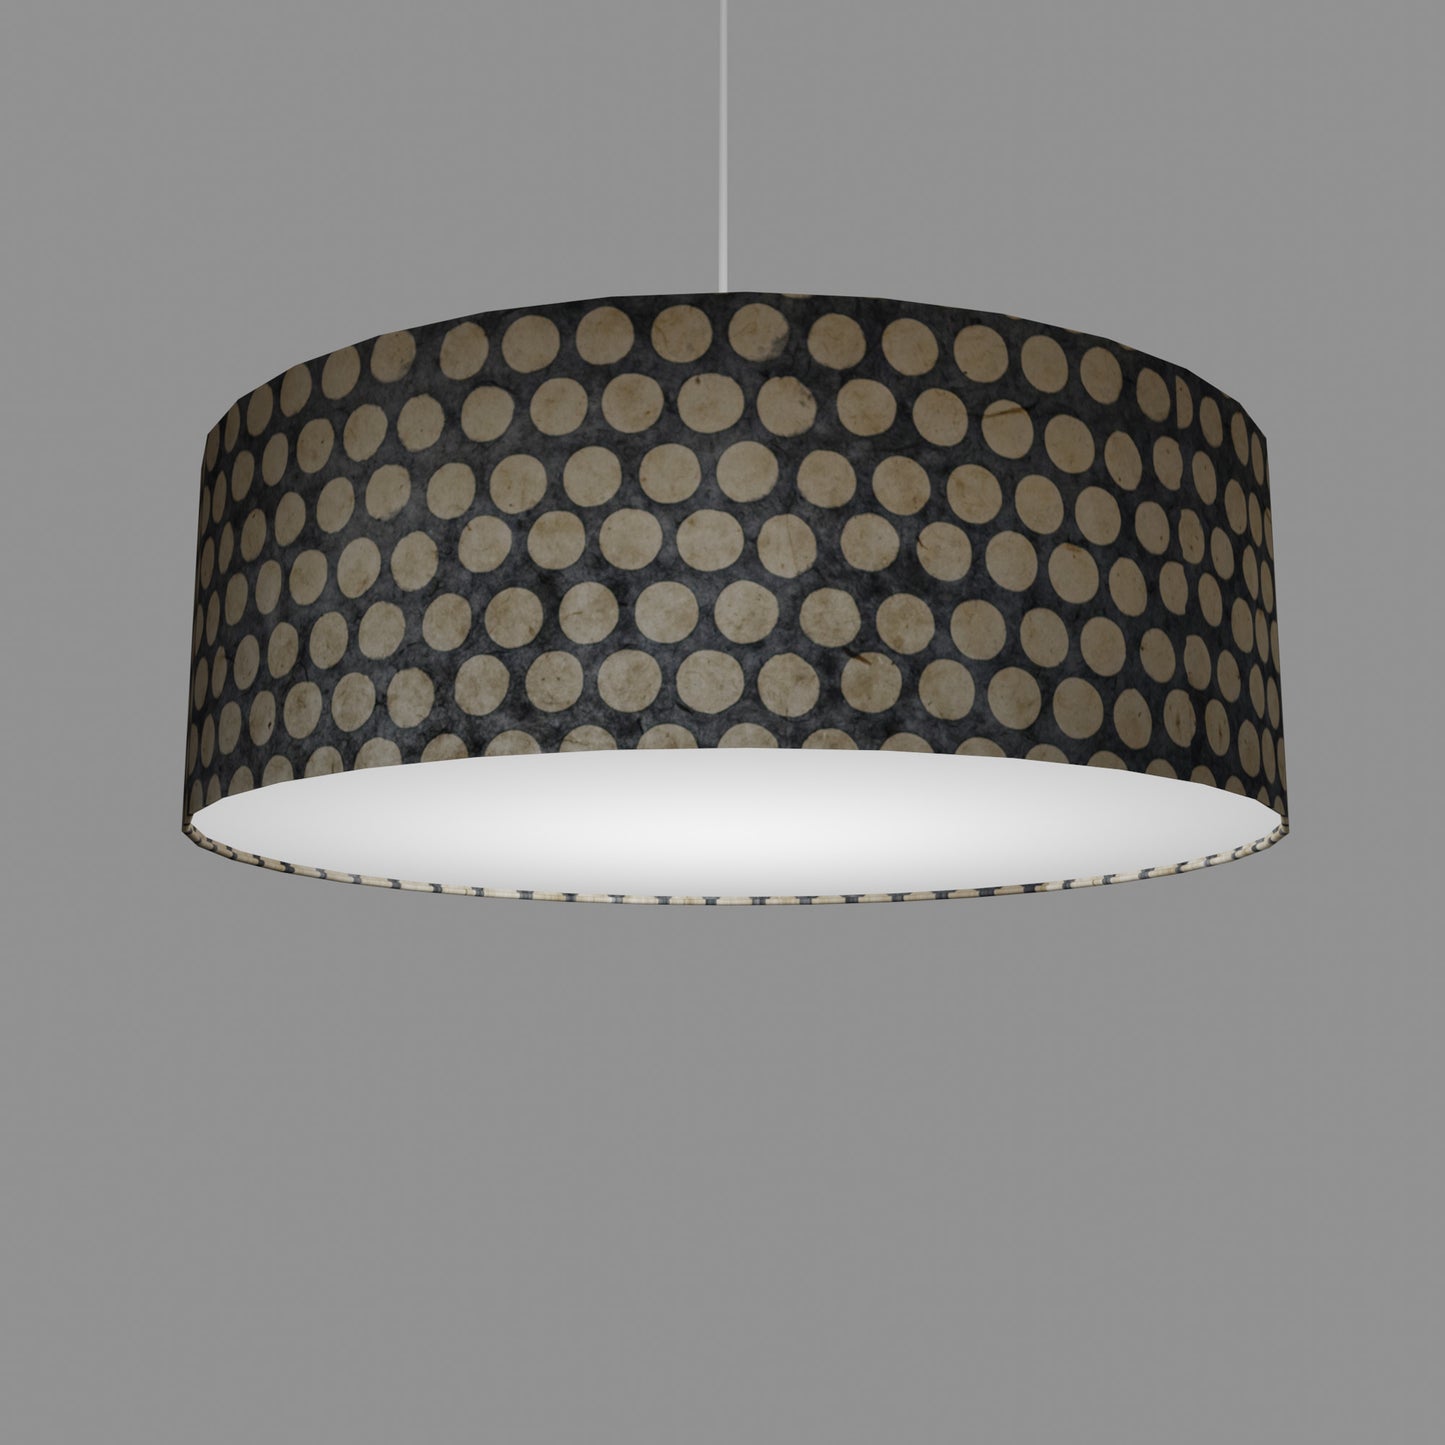 Drum Lamp Shade - P78 - Batik Dots on Grey, 60cm(d) x 20cm(h)